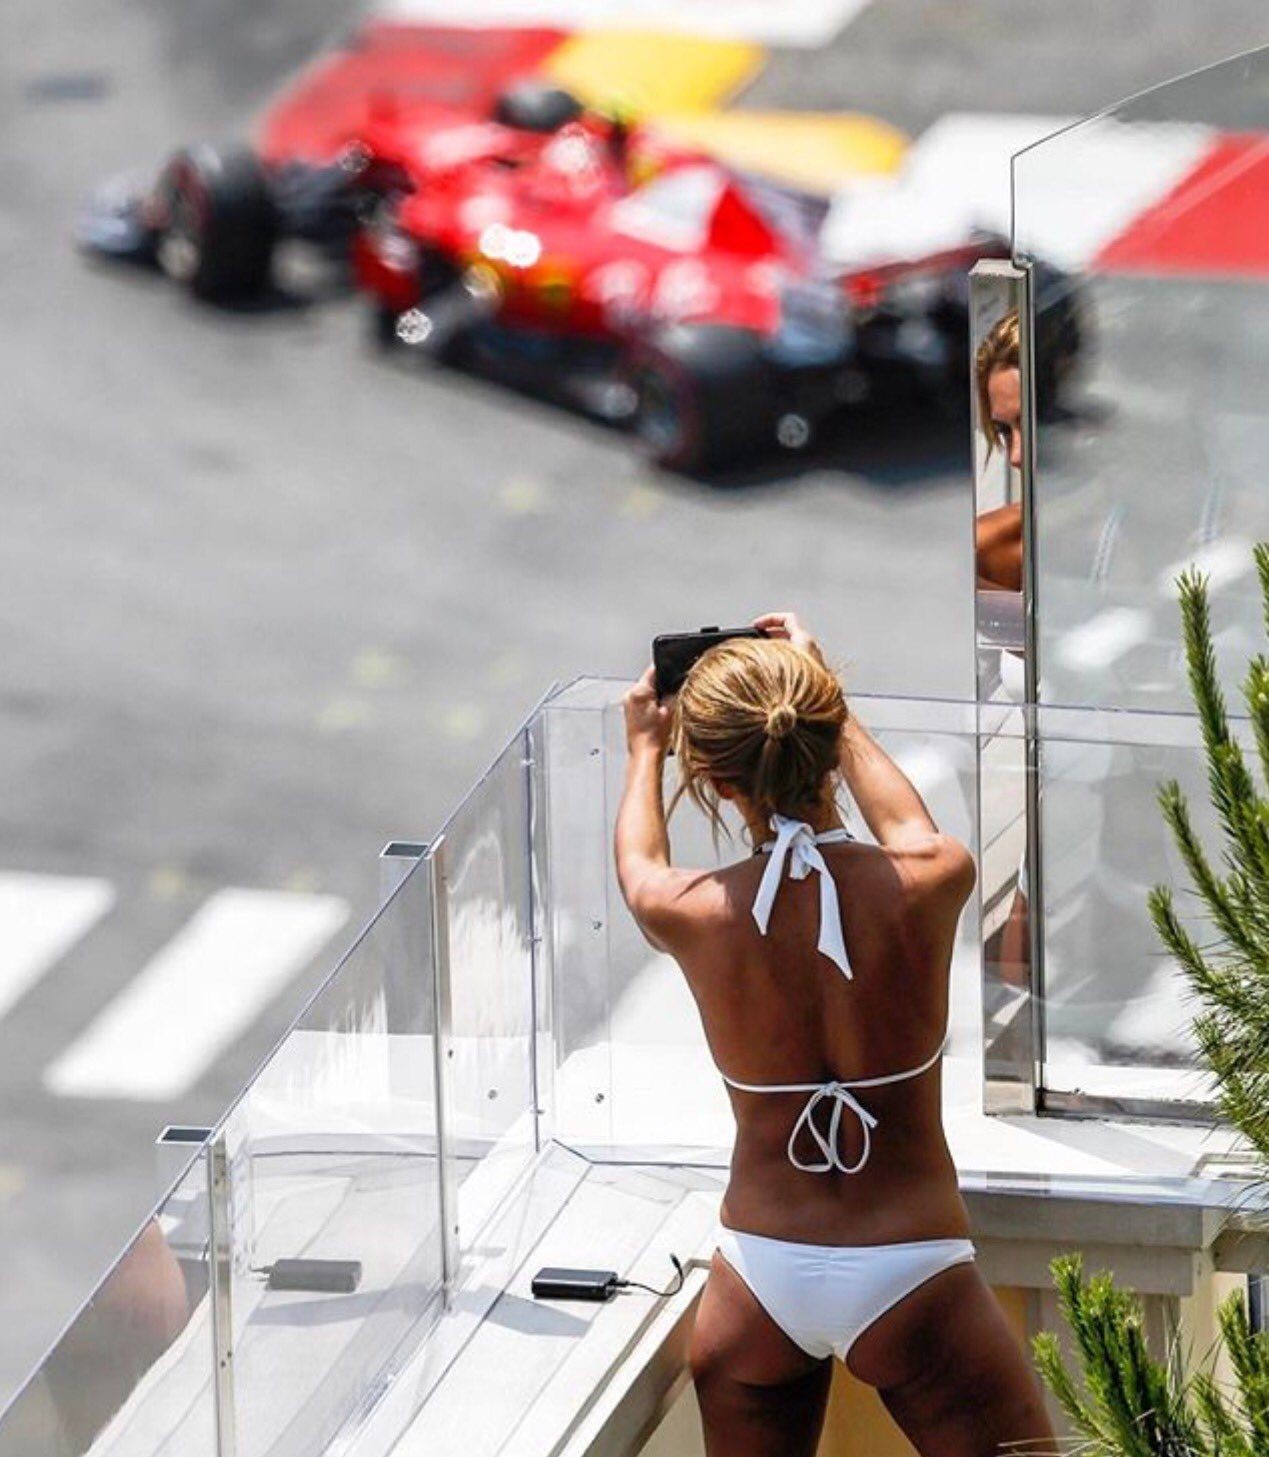 A Ferrari at Monaco watched by a girl in a bikini.